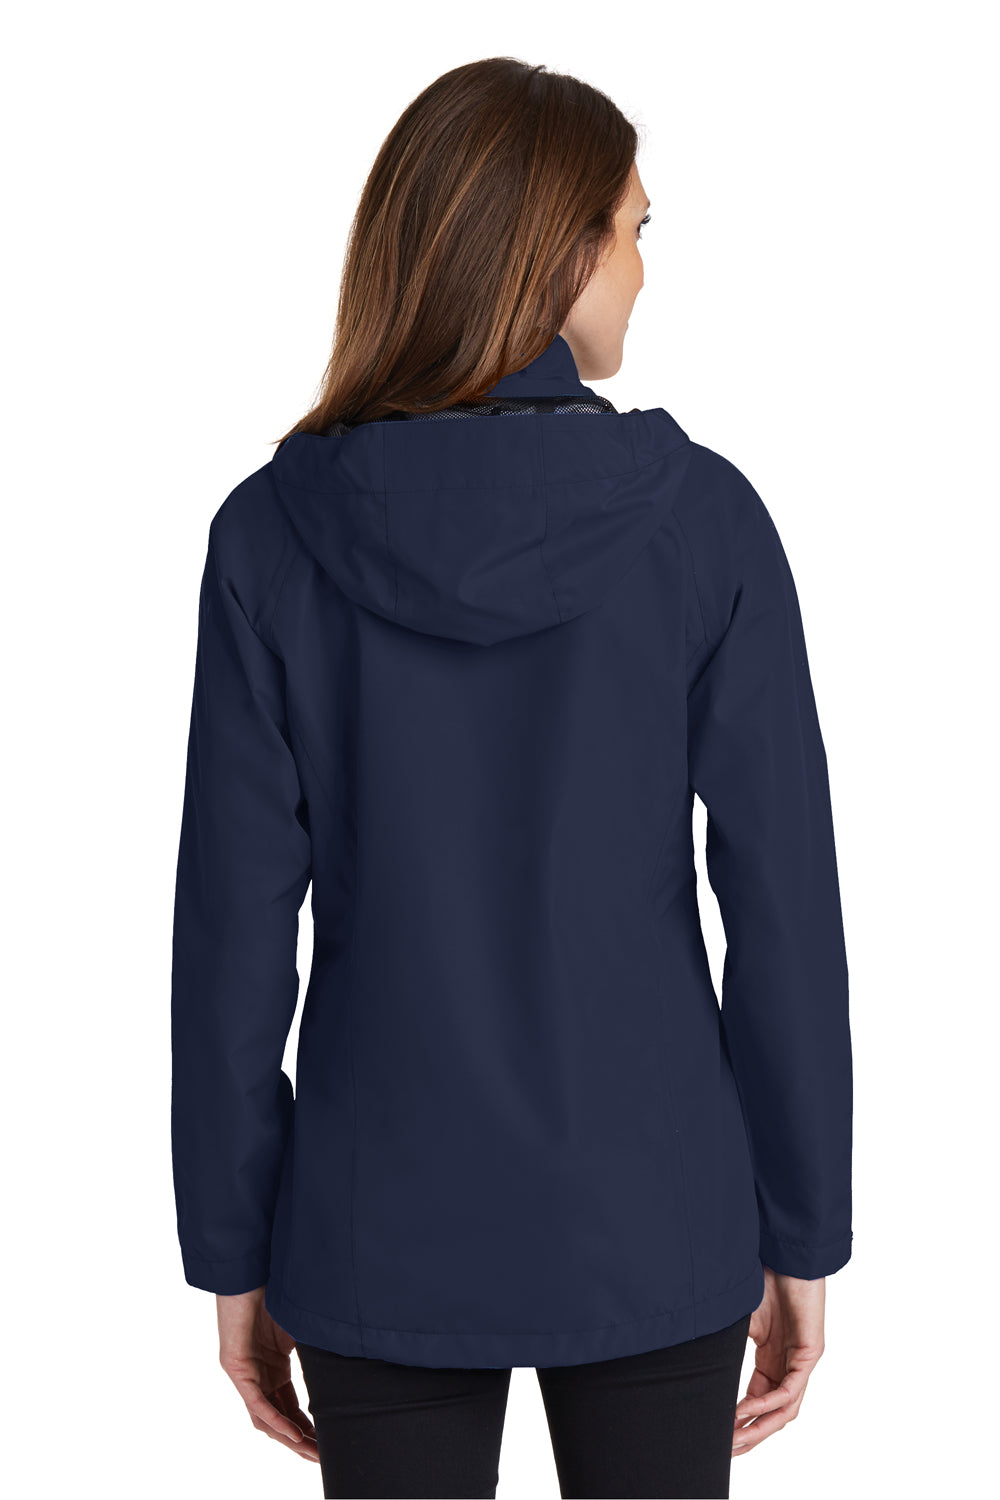 Port Authority L333 Womens Torrent Waterproof Full Zip Hooded Jacket Navy Blue Back